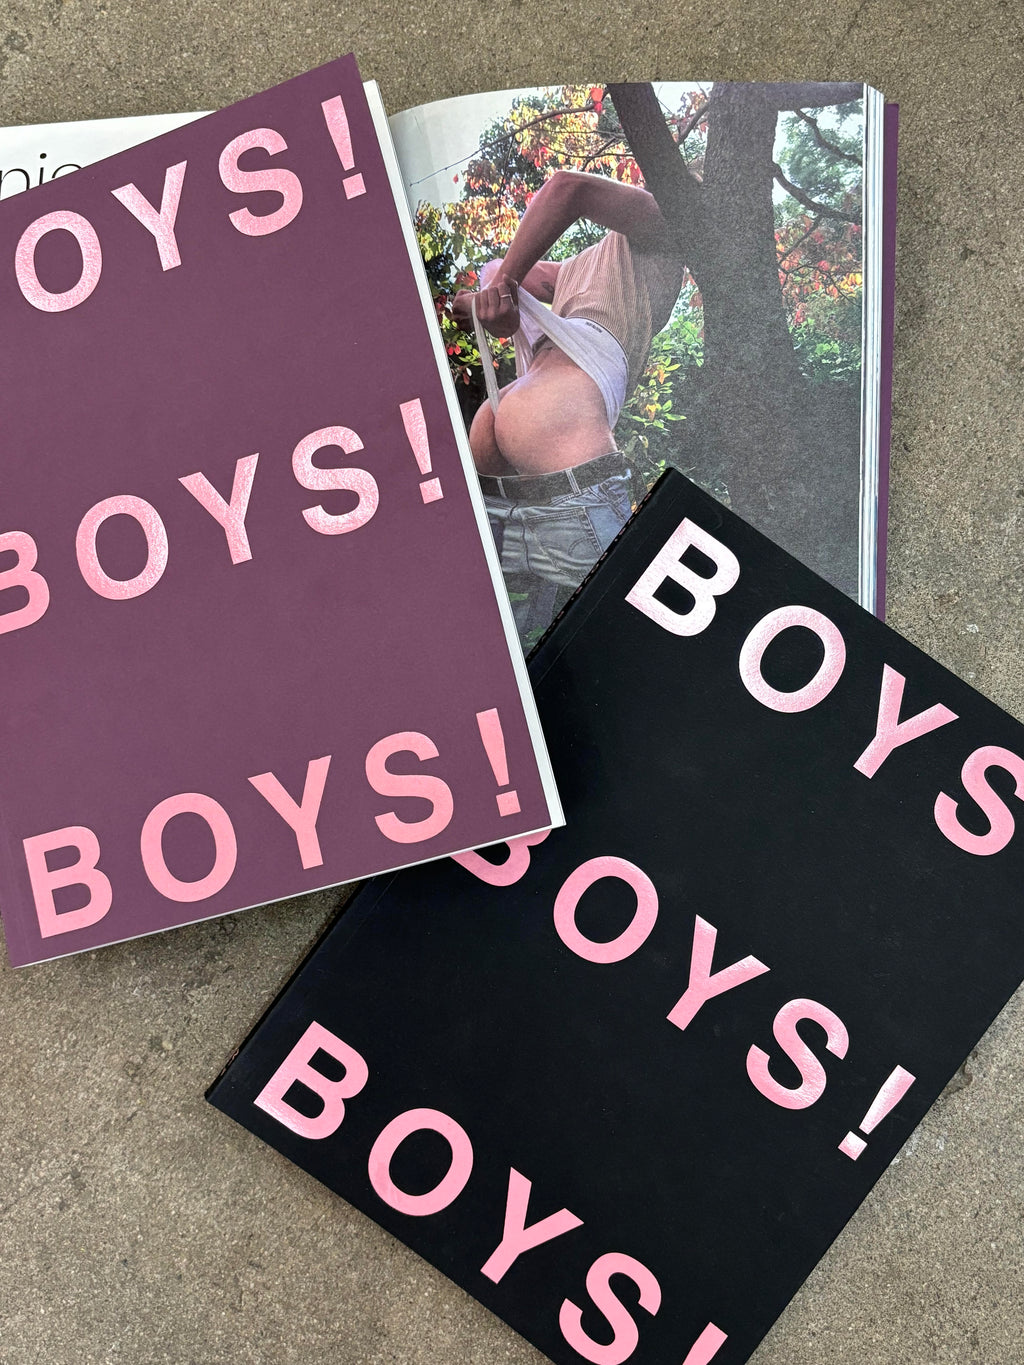 BOYS! BOYS! BOYS! The Magazine Value Bundle